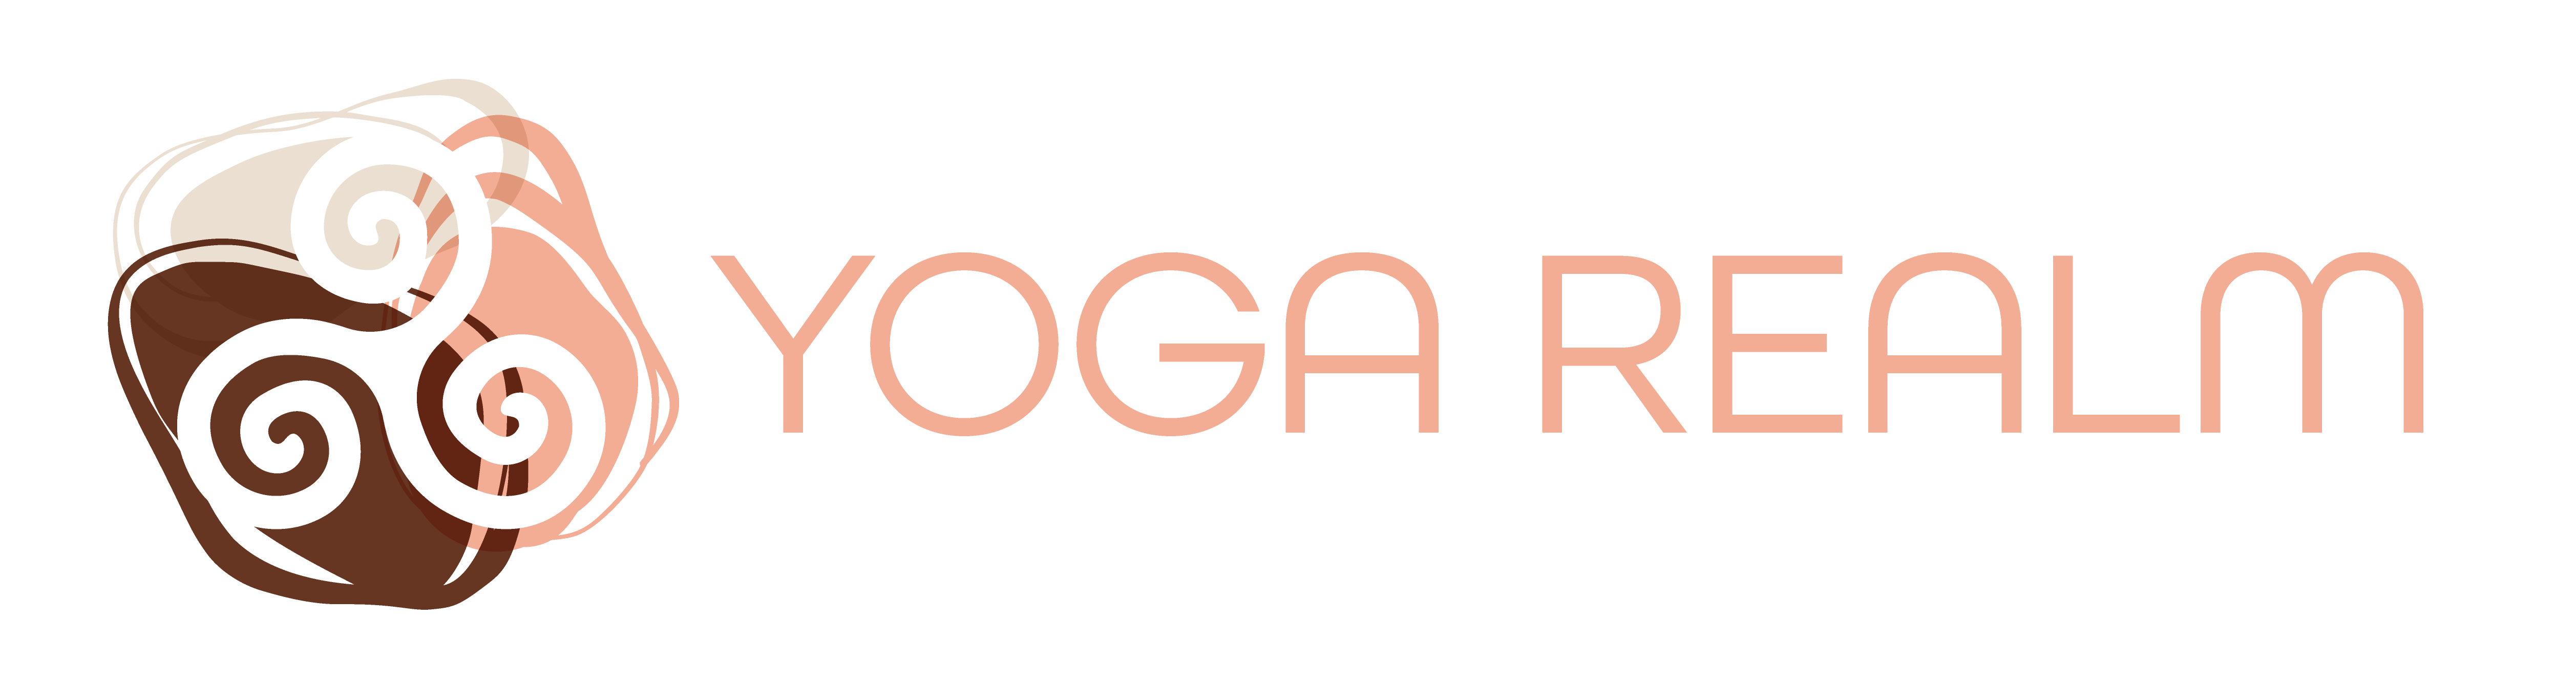 Yoga Realm